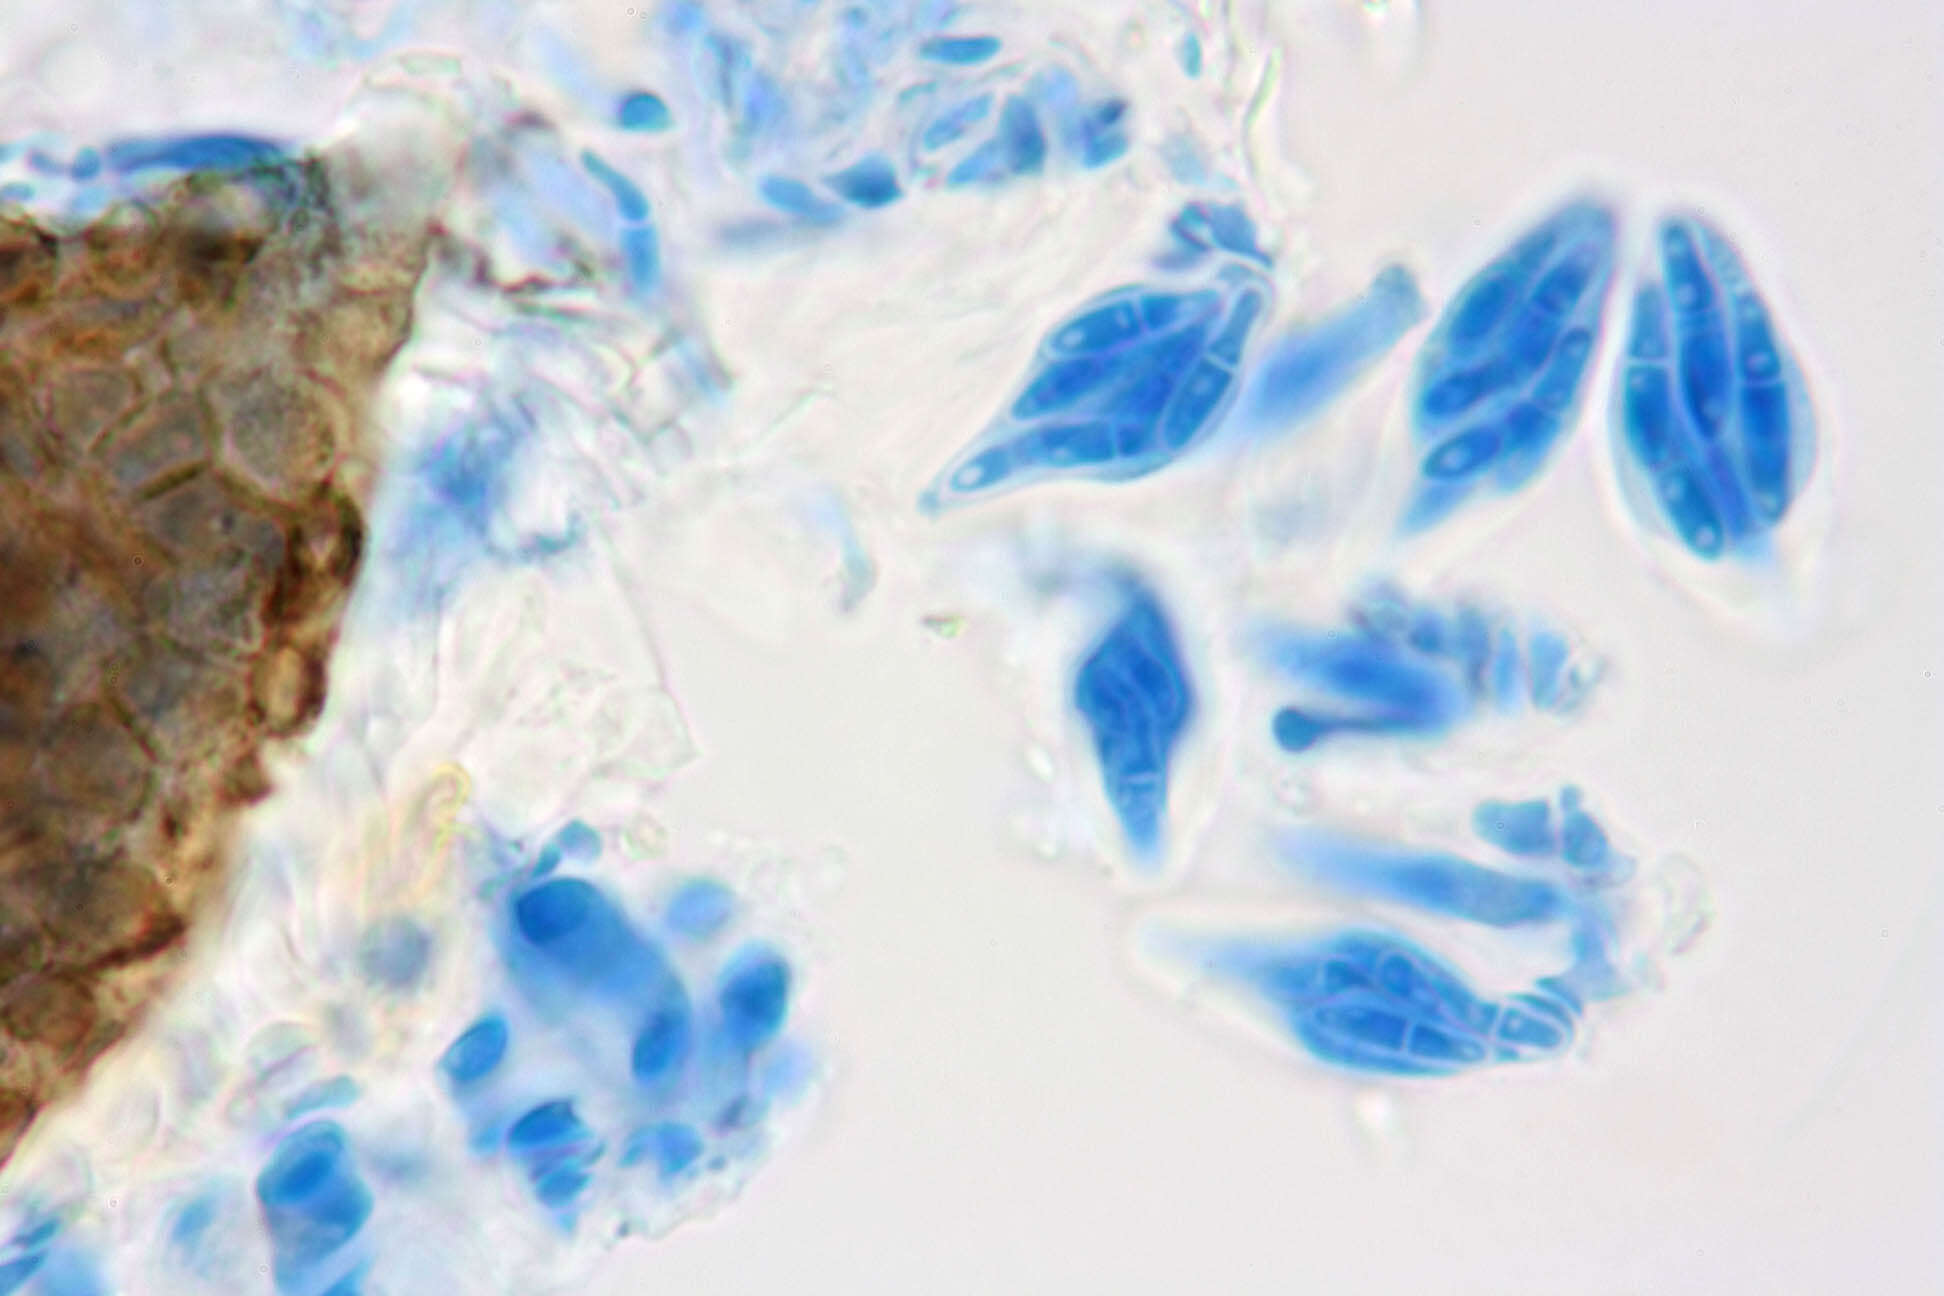 Image of Pteromycula clypeiformis P. F. Cannon 1997